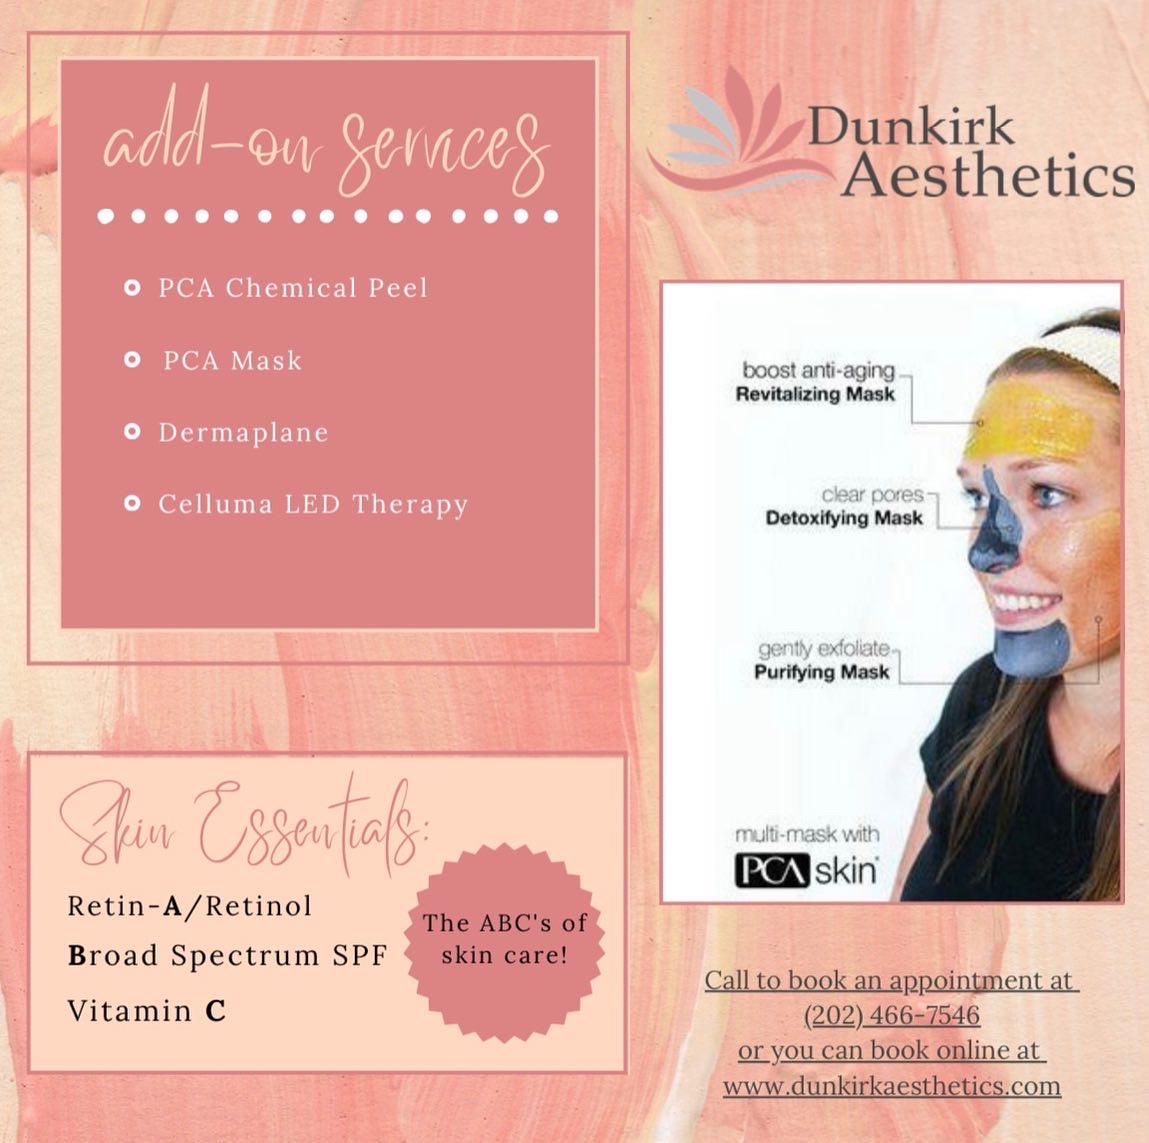 Dunkirk Aesthetics August Specials